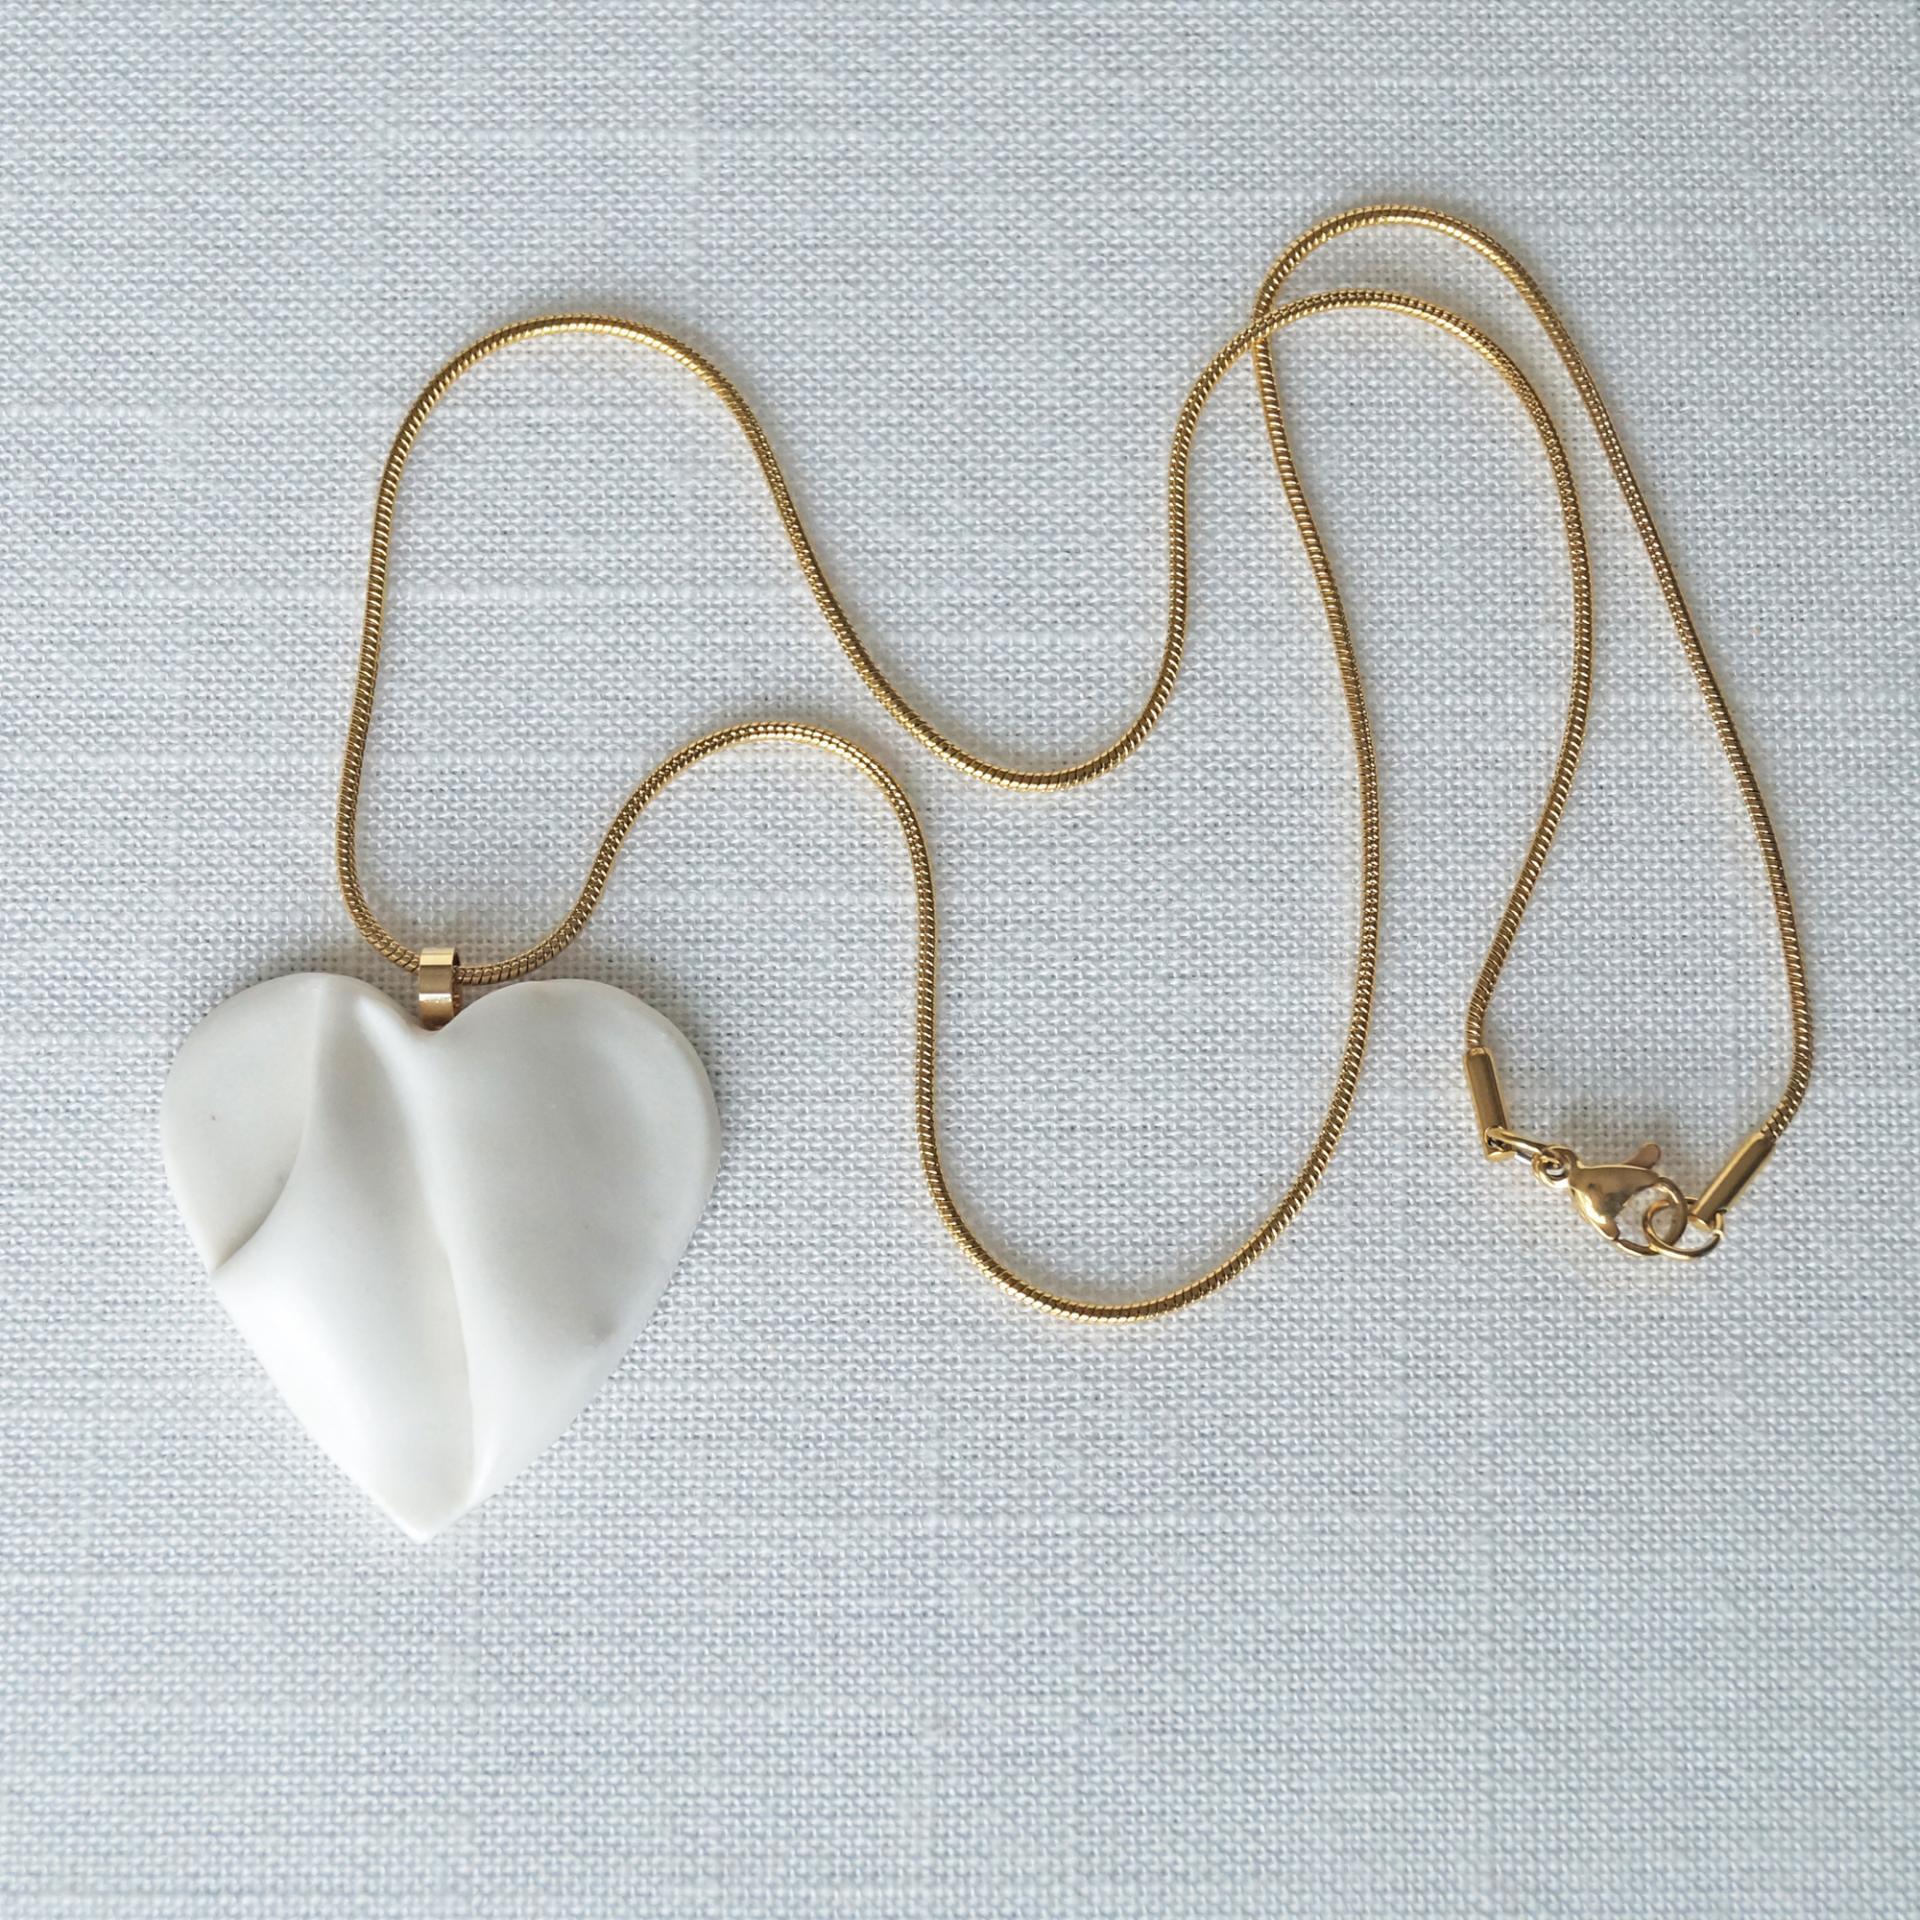 Draped porcelain HEART necklace, medium white porcelain heart, gold, stainless steel snake chain, Bride necklace, white satin